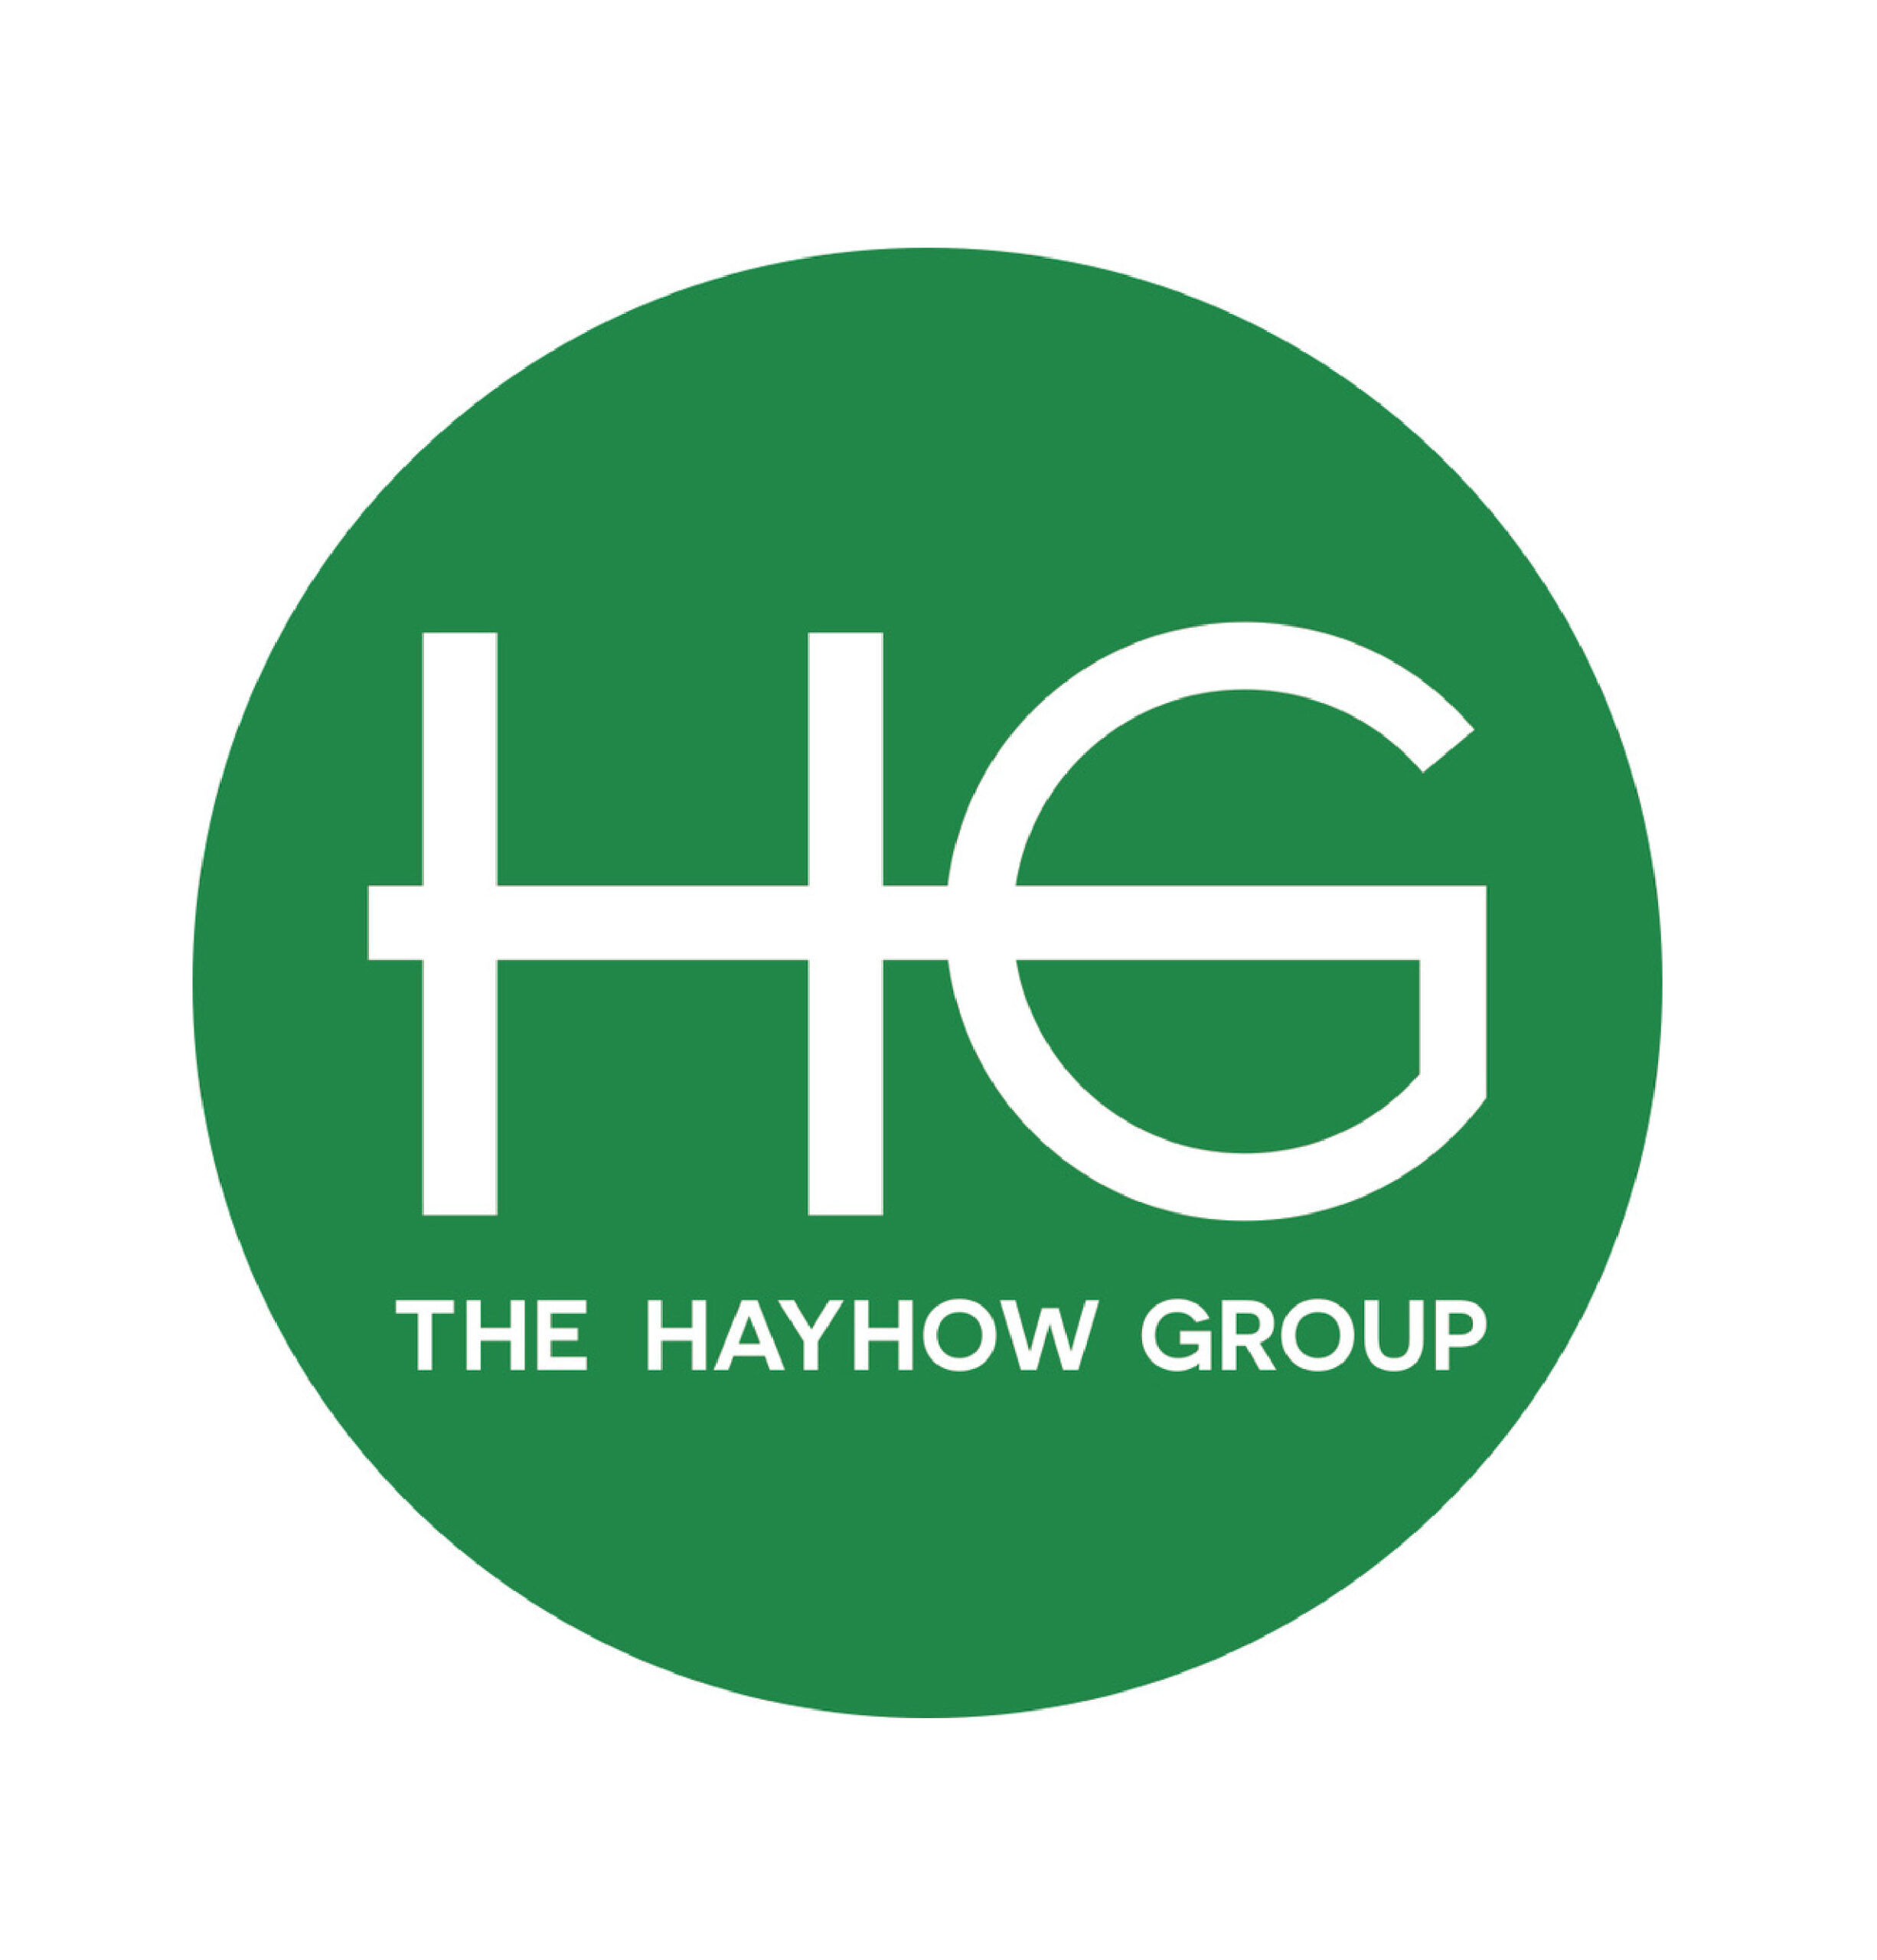 The Hayhow Group